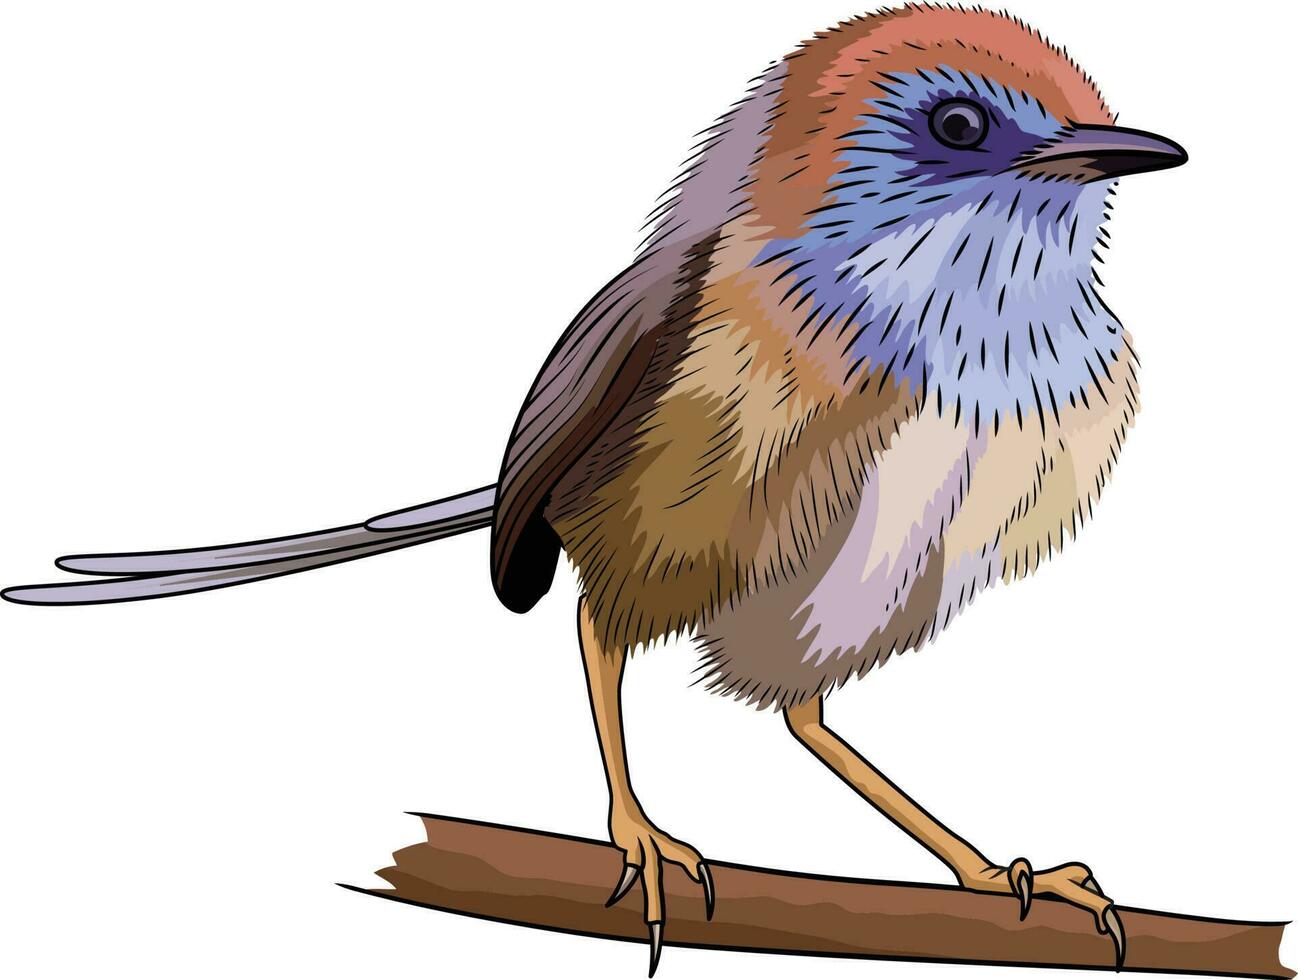 Mallee emú reyezuelo pájaro vector ilustración estipulado Mallee Maluridae pájaro vector imagen